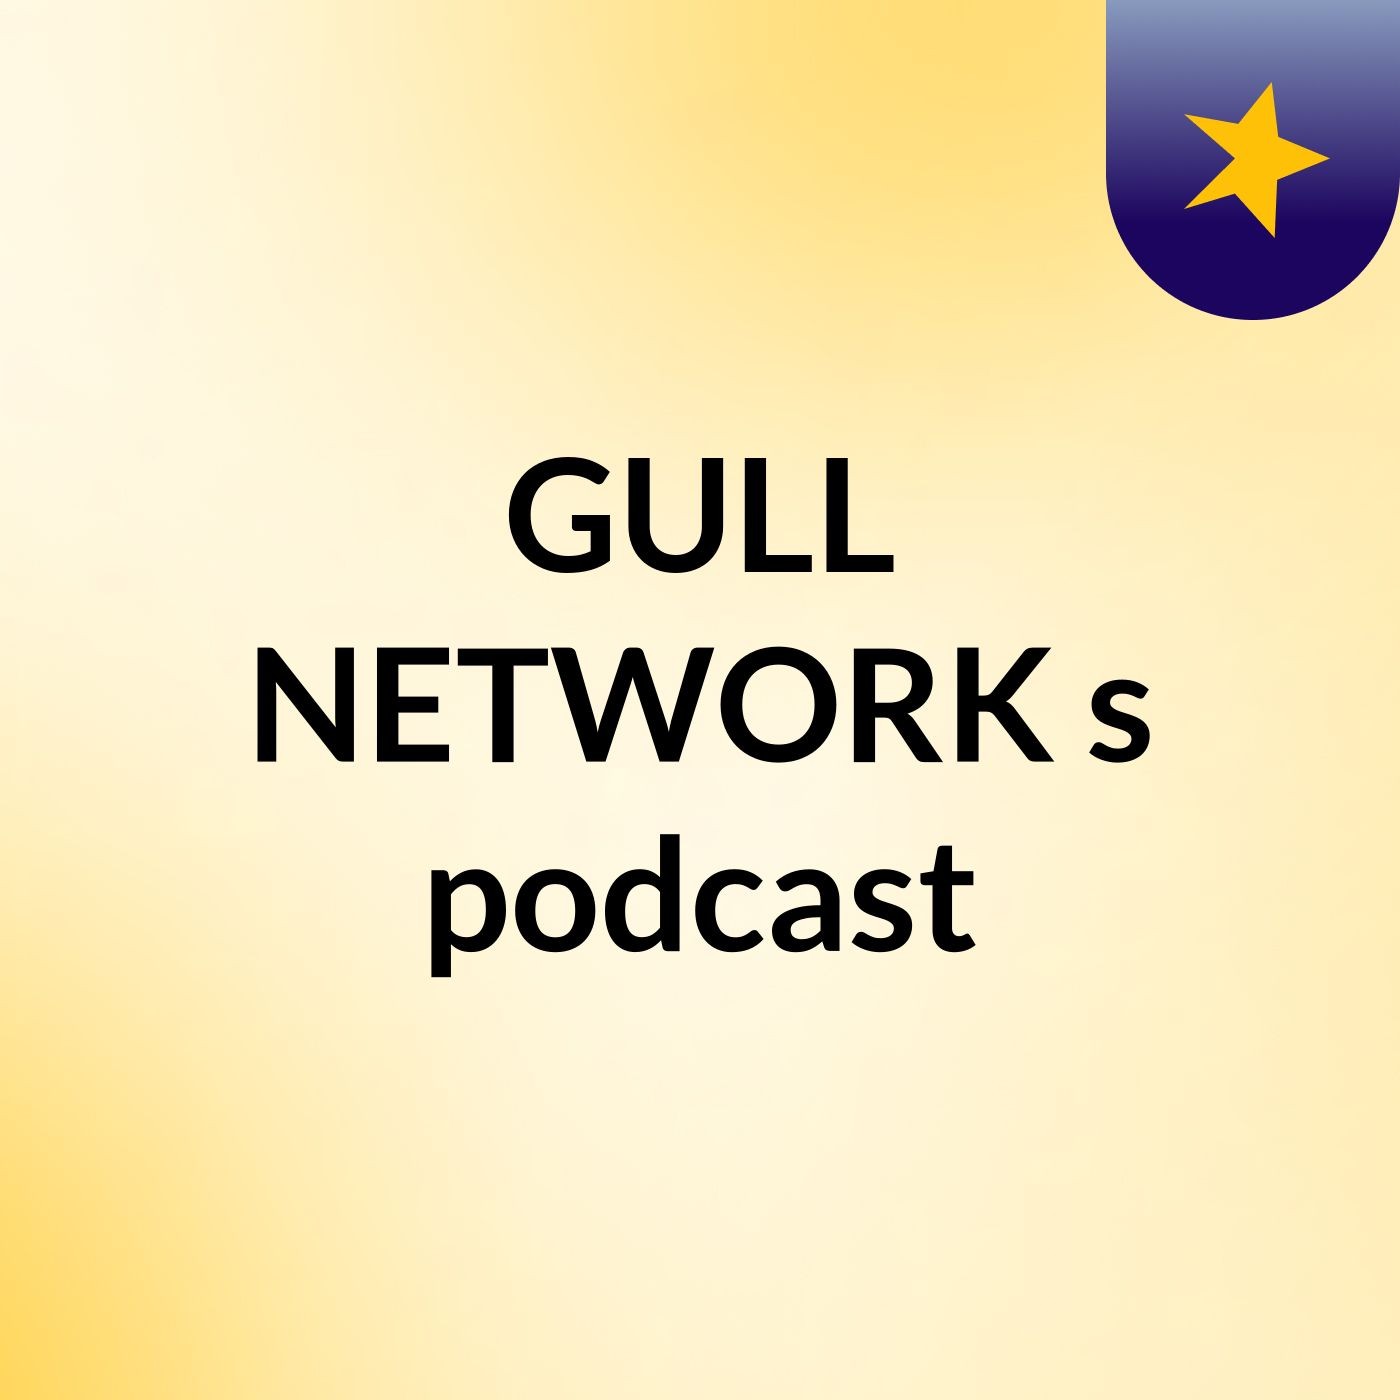 Episode 8 - GULL NETWORK's podcast